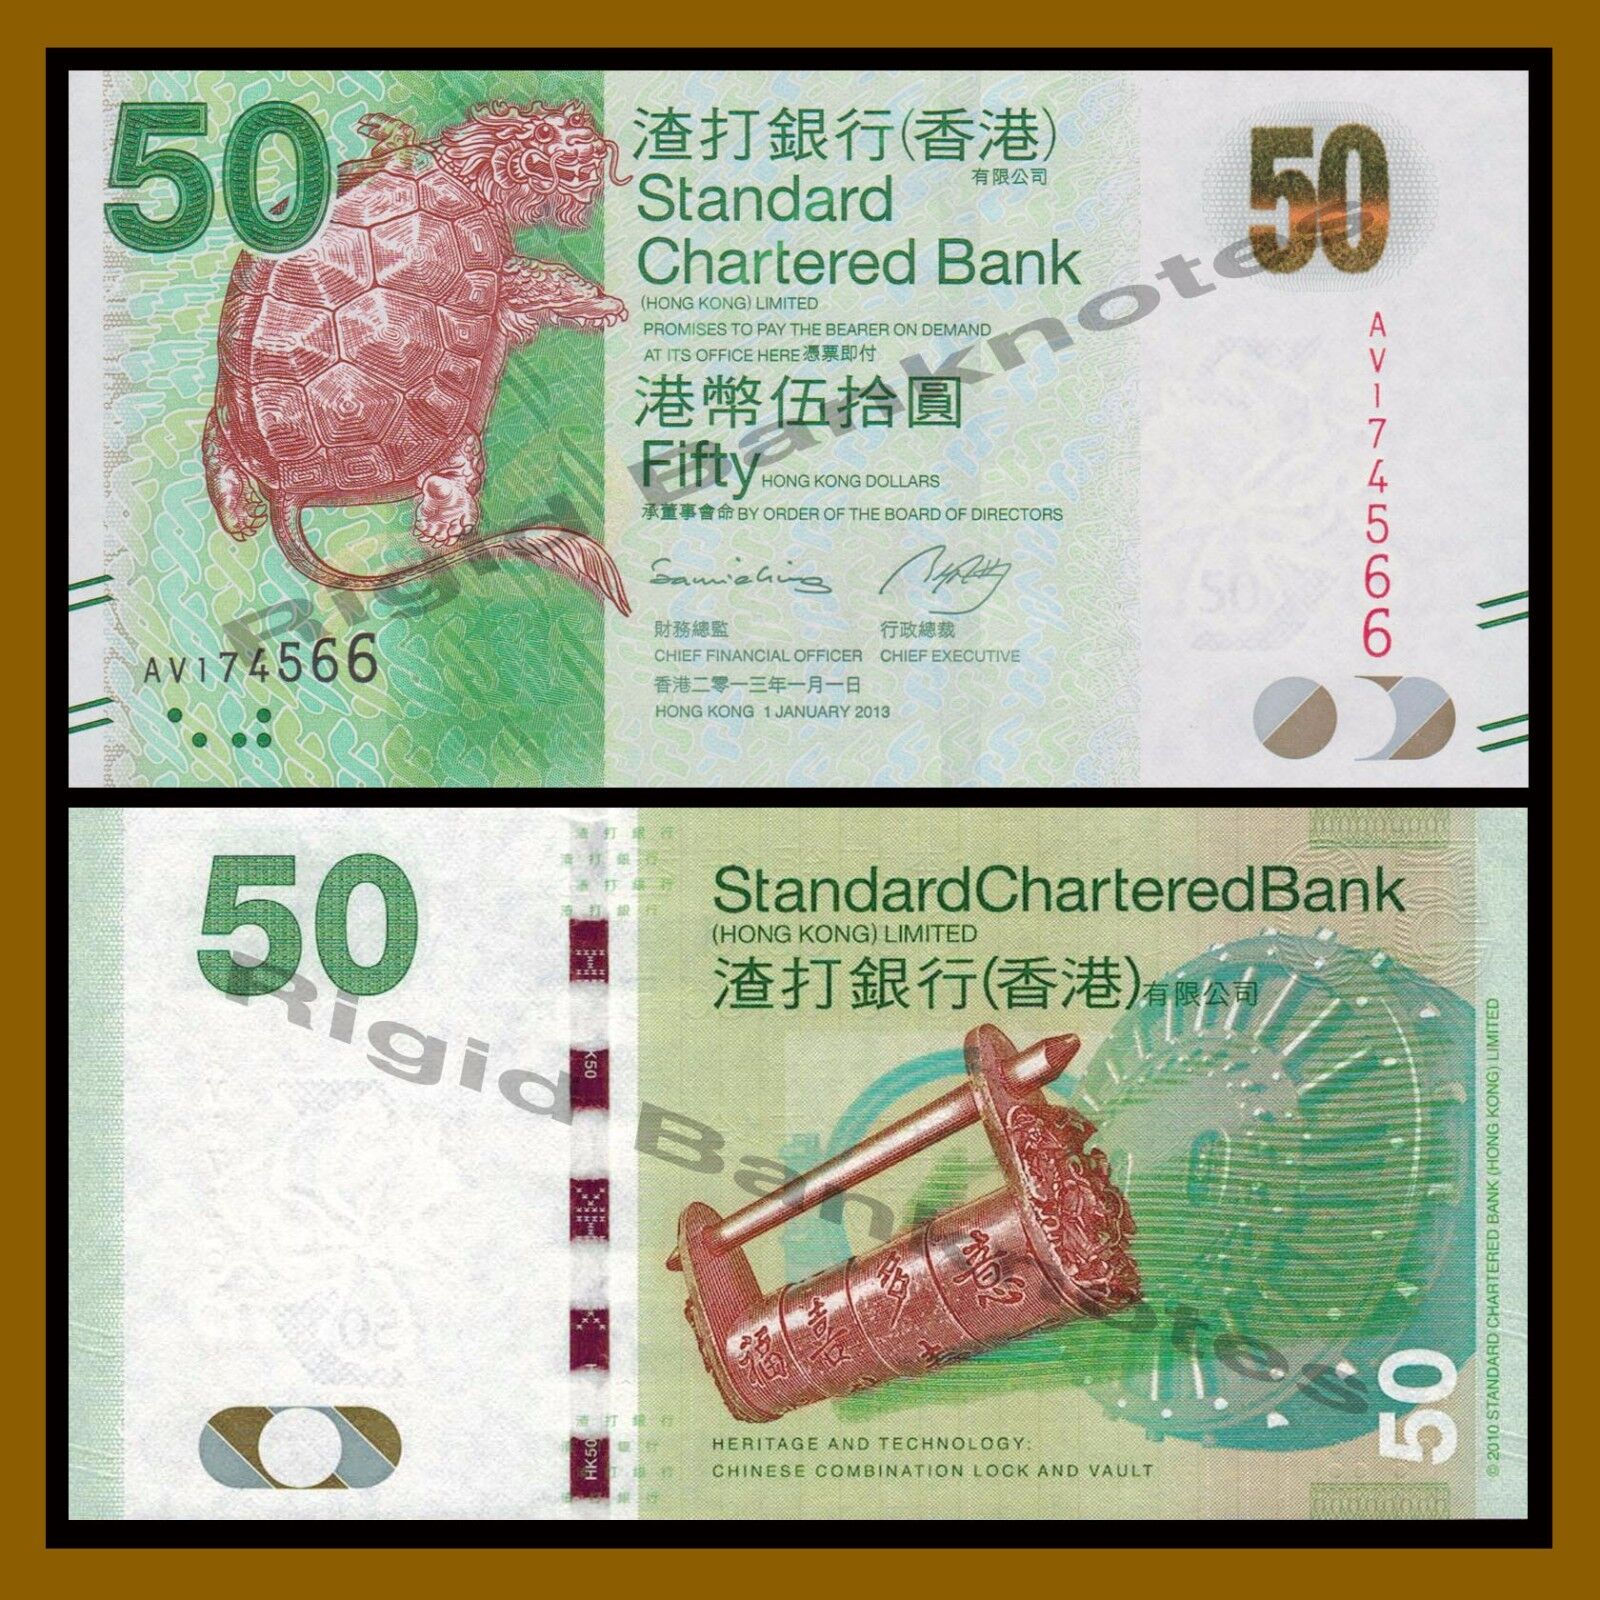 Hong Kong Quantity limited 50 Dollars Unc P-298 2013 40% OFF Cheap Sale SCB